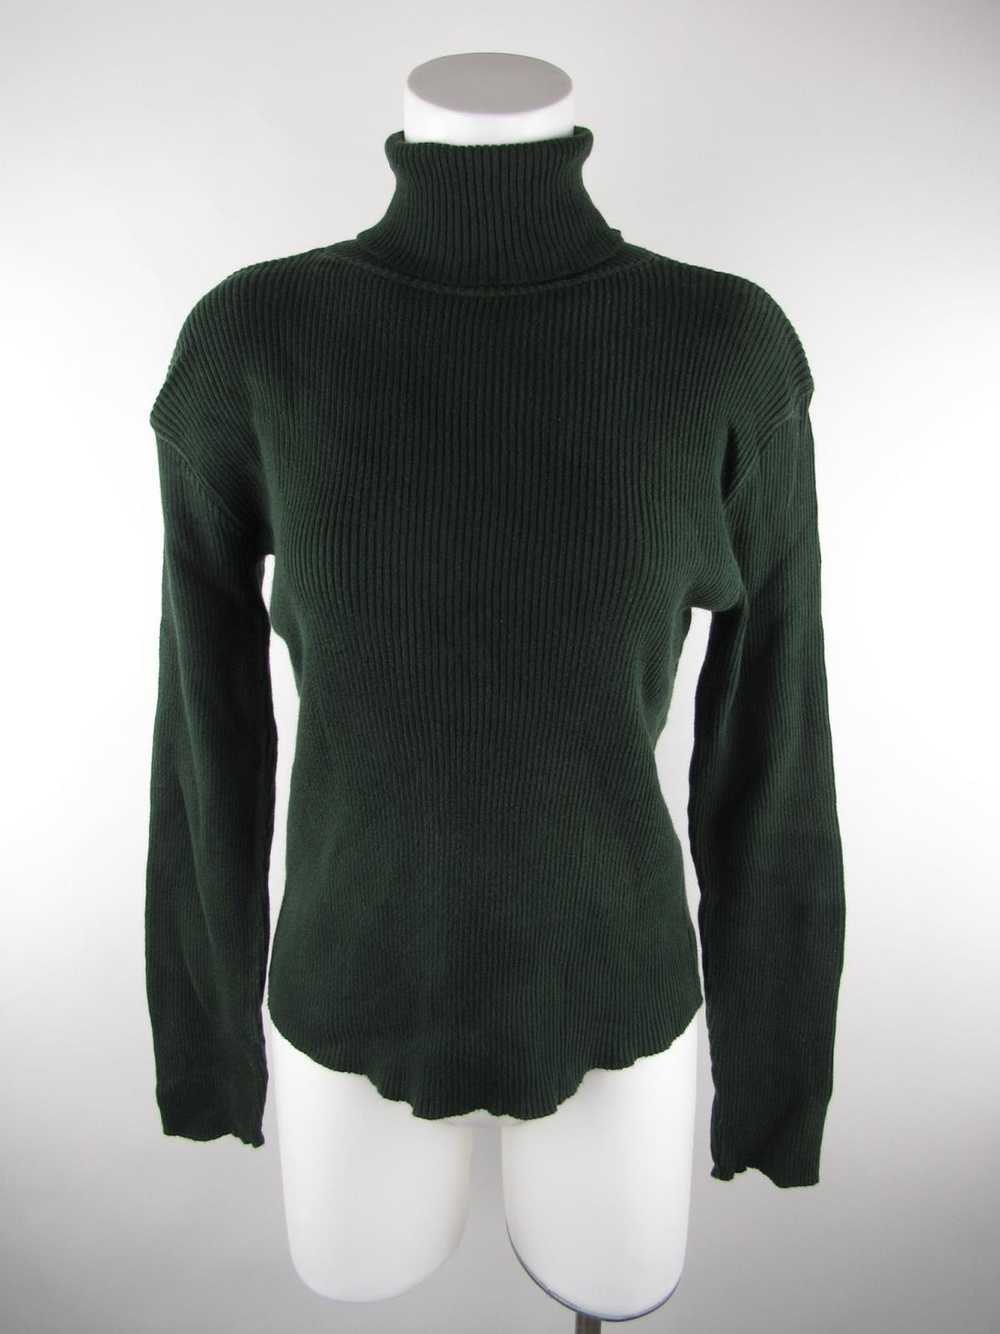 G.H. Bass & Co. Turtleneck Sweater - image 1